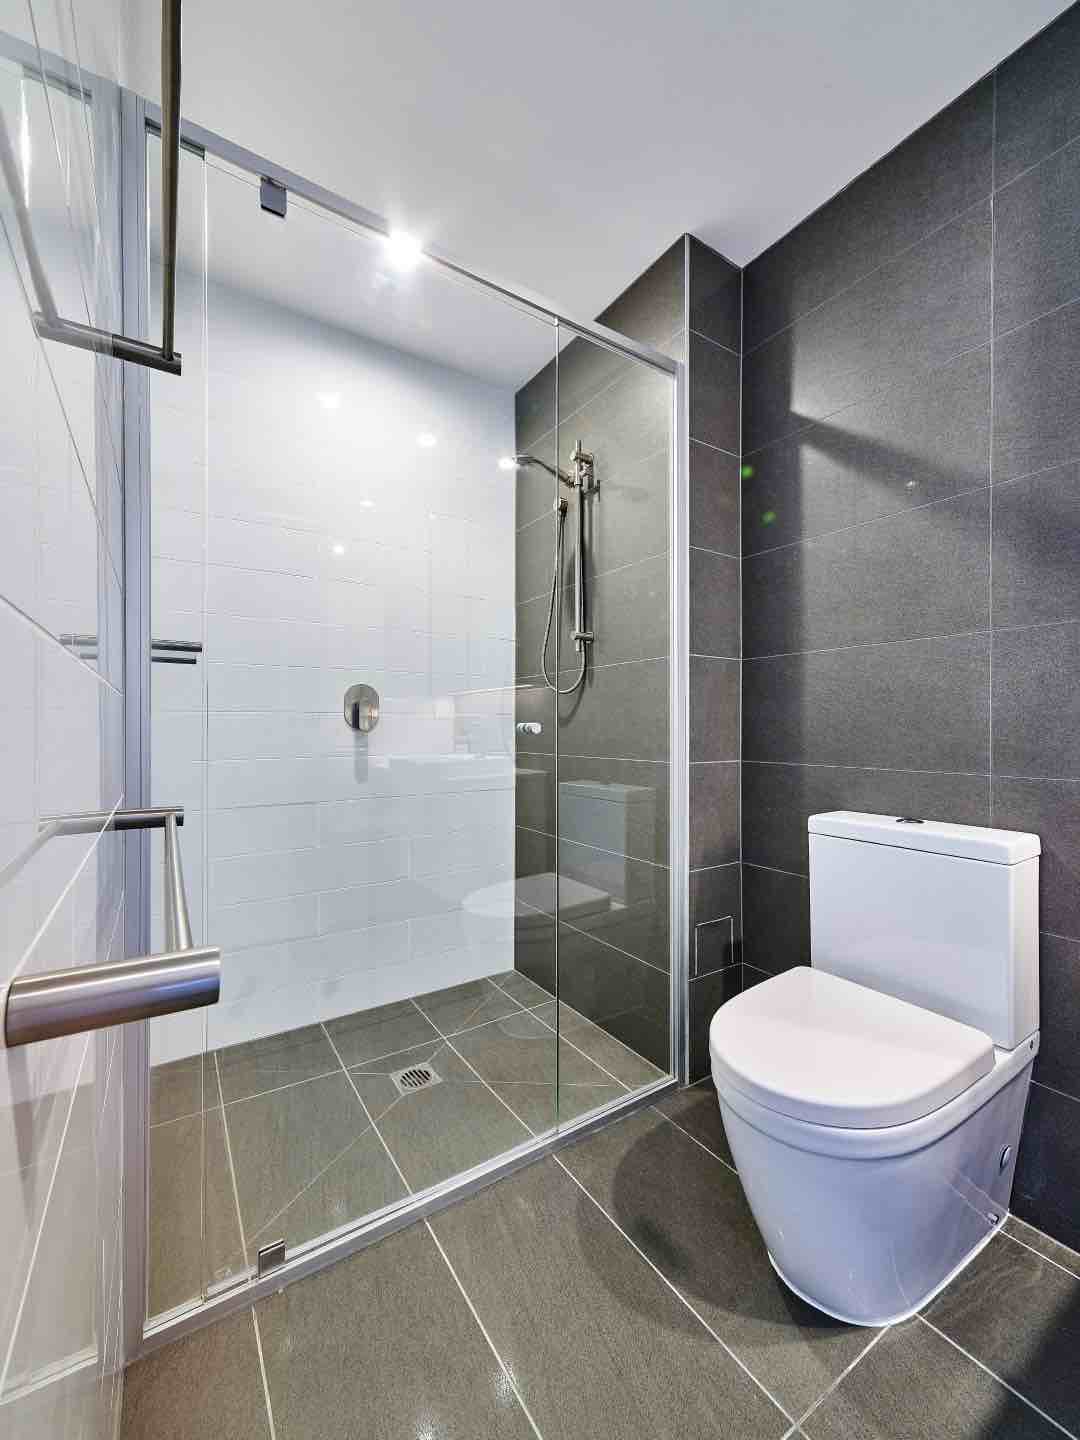 Vogue Semi Frameless Shower Screen Installed In Grey Tiled Bathroom